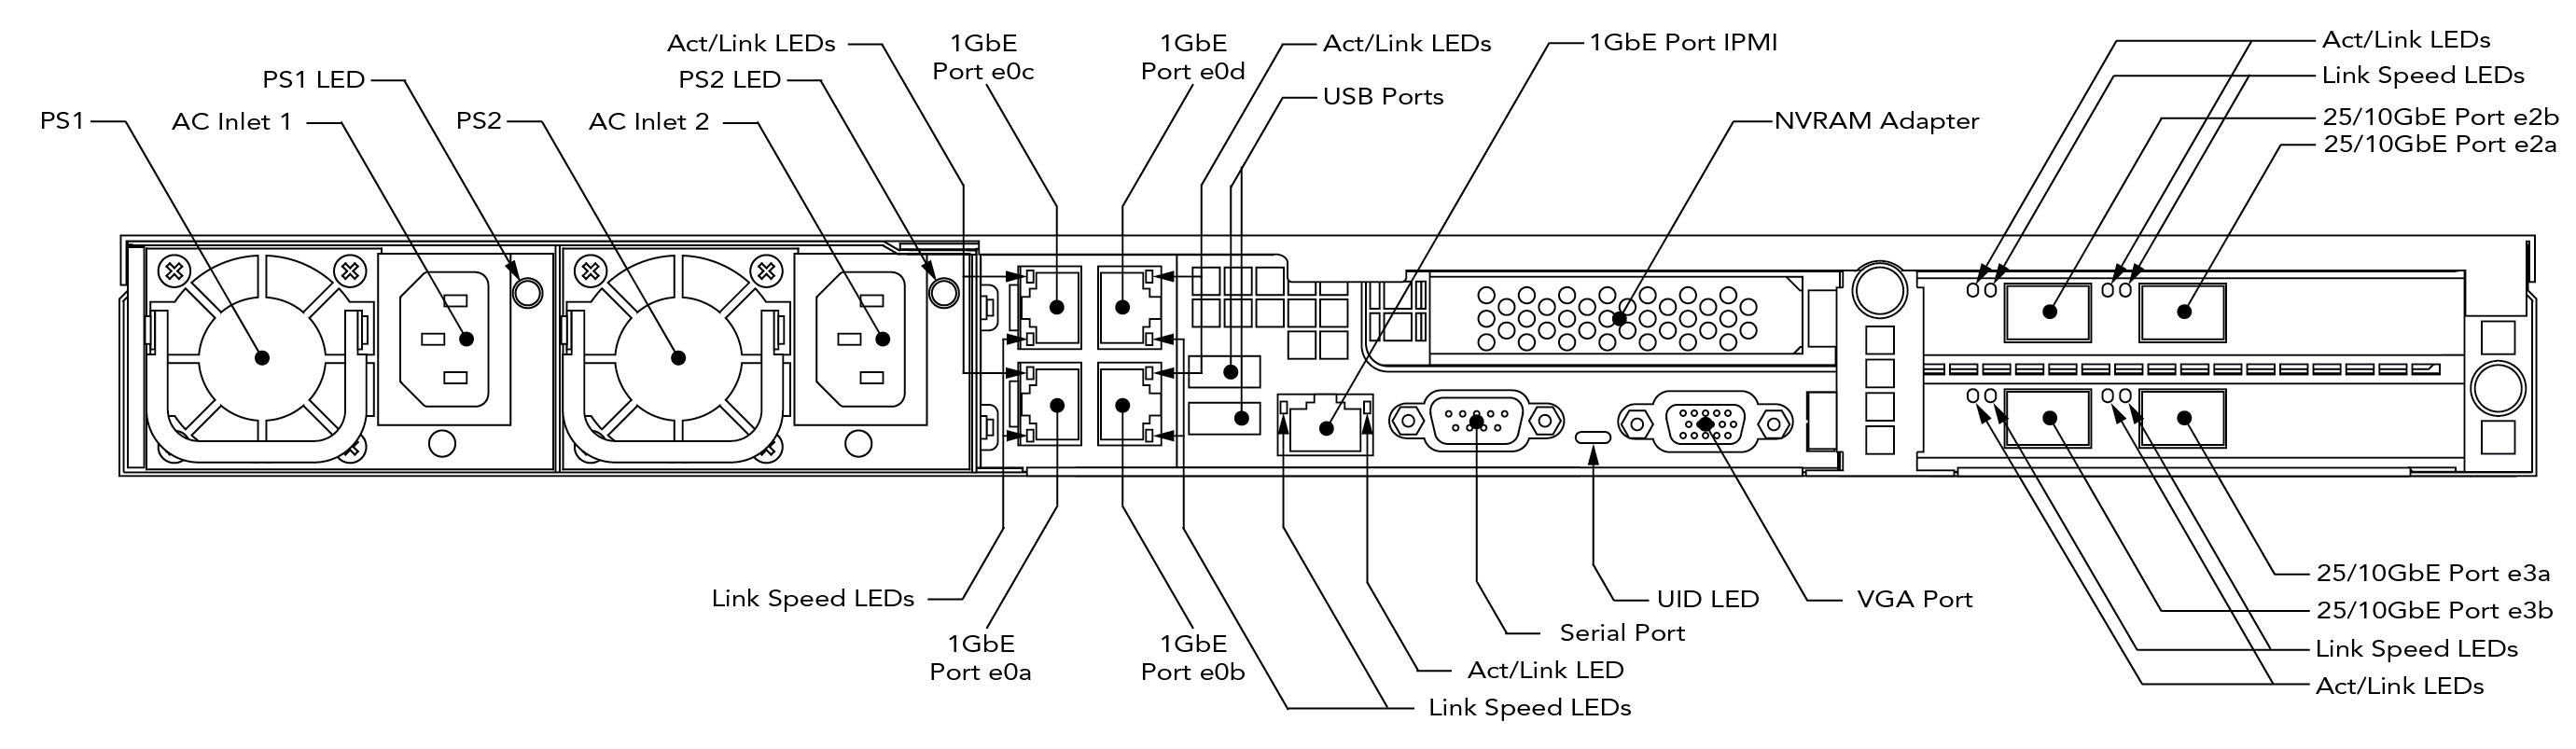 Rear view diagram of an FXT 5850 node